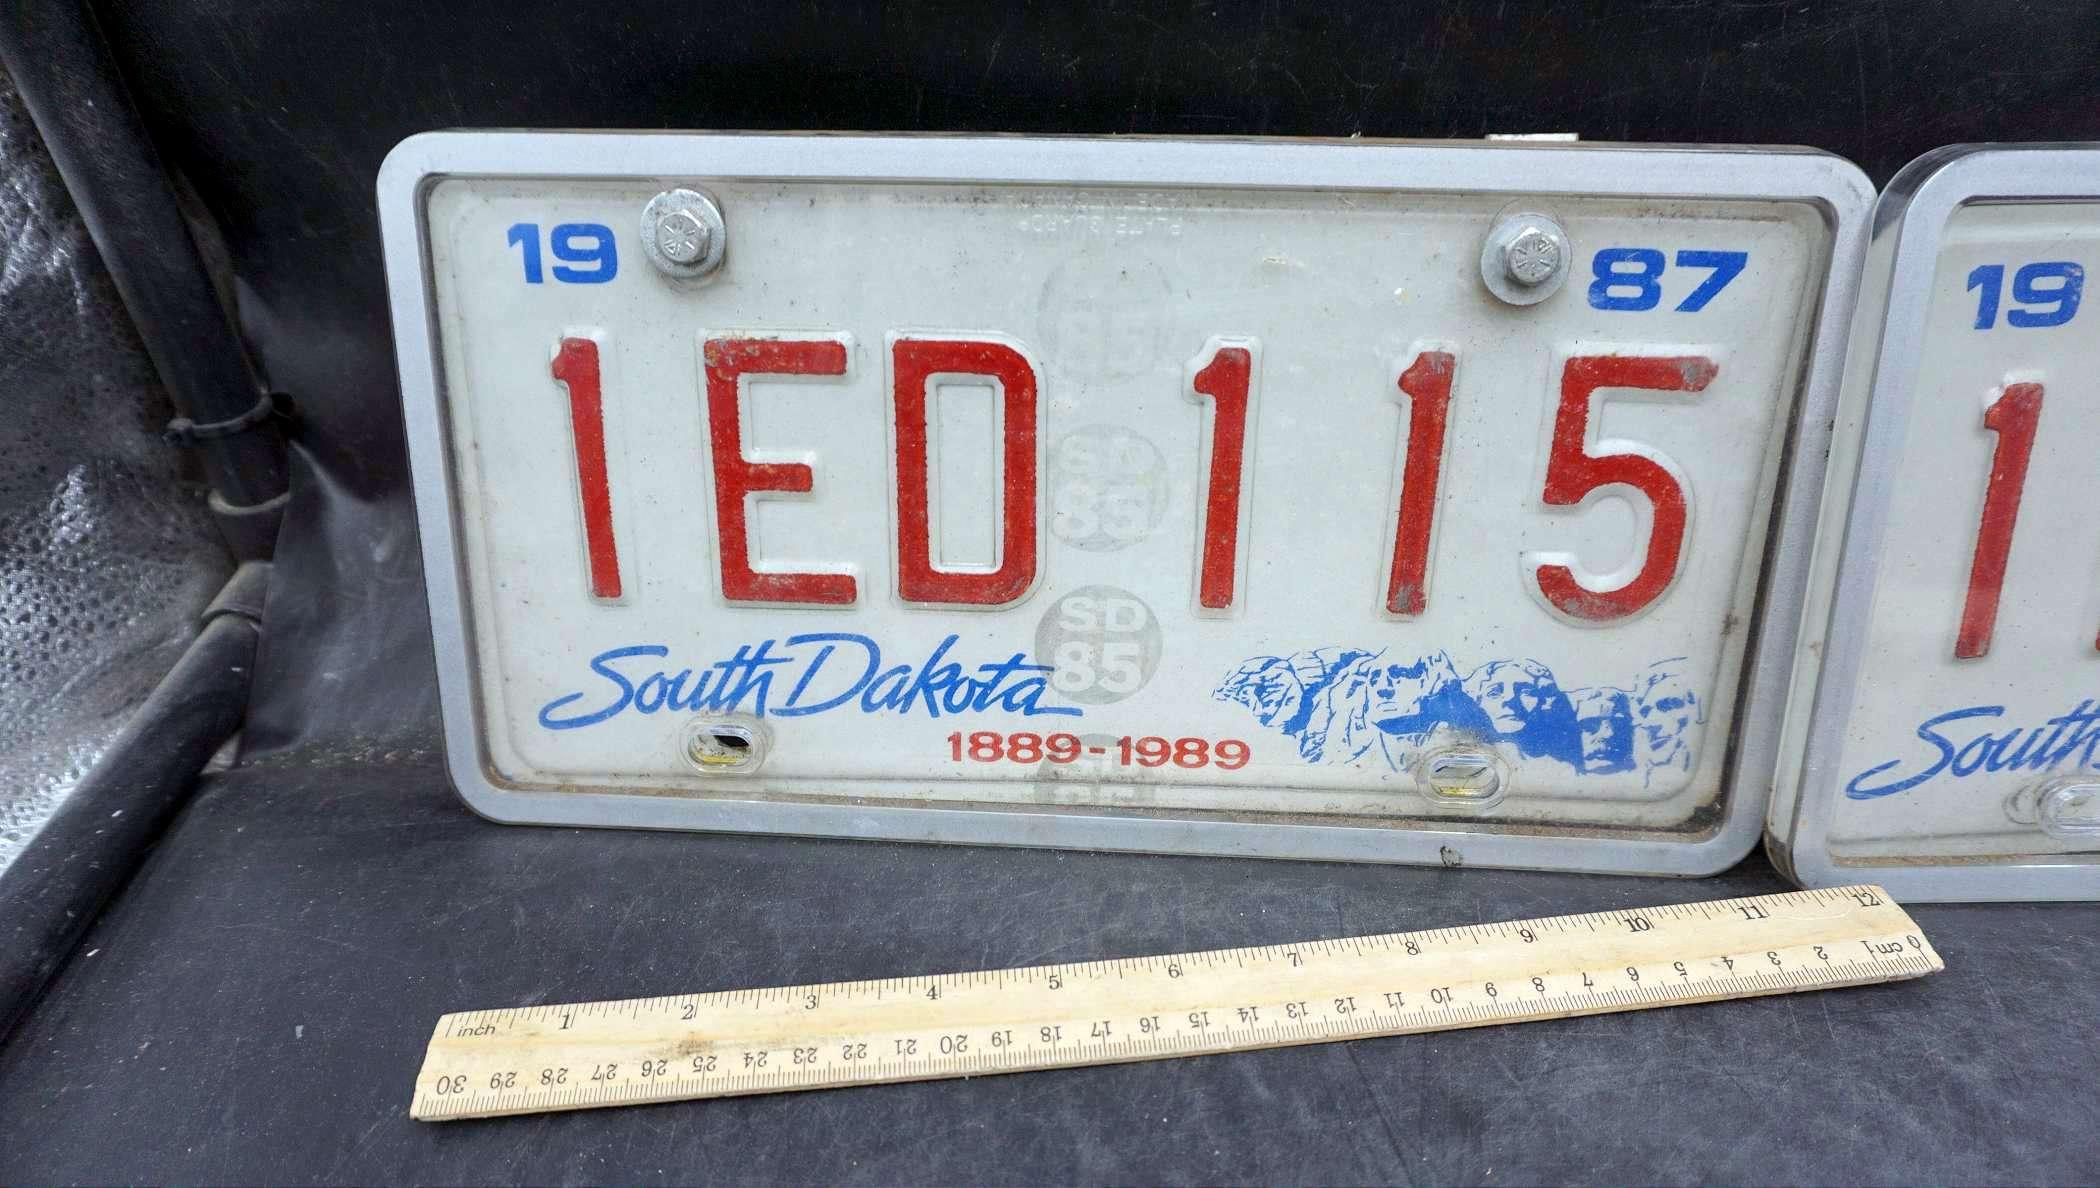 2 - Matching Set Of 1987 South Dakota License Plates